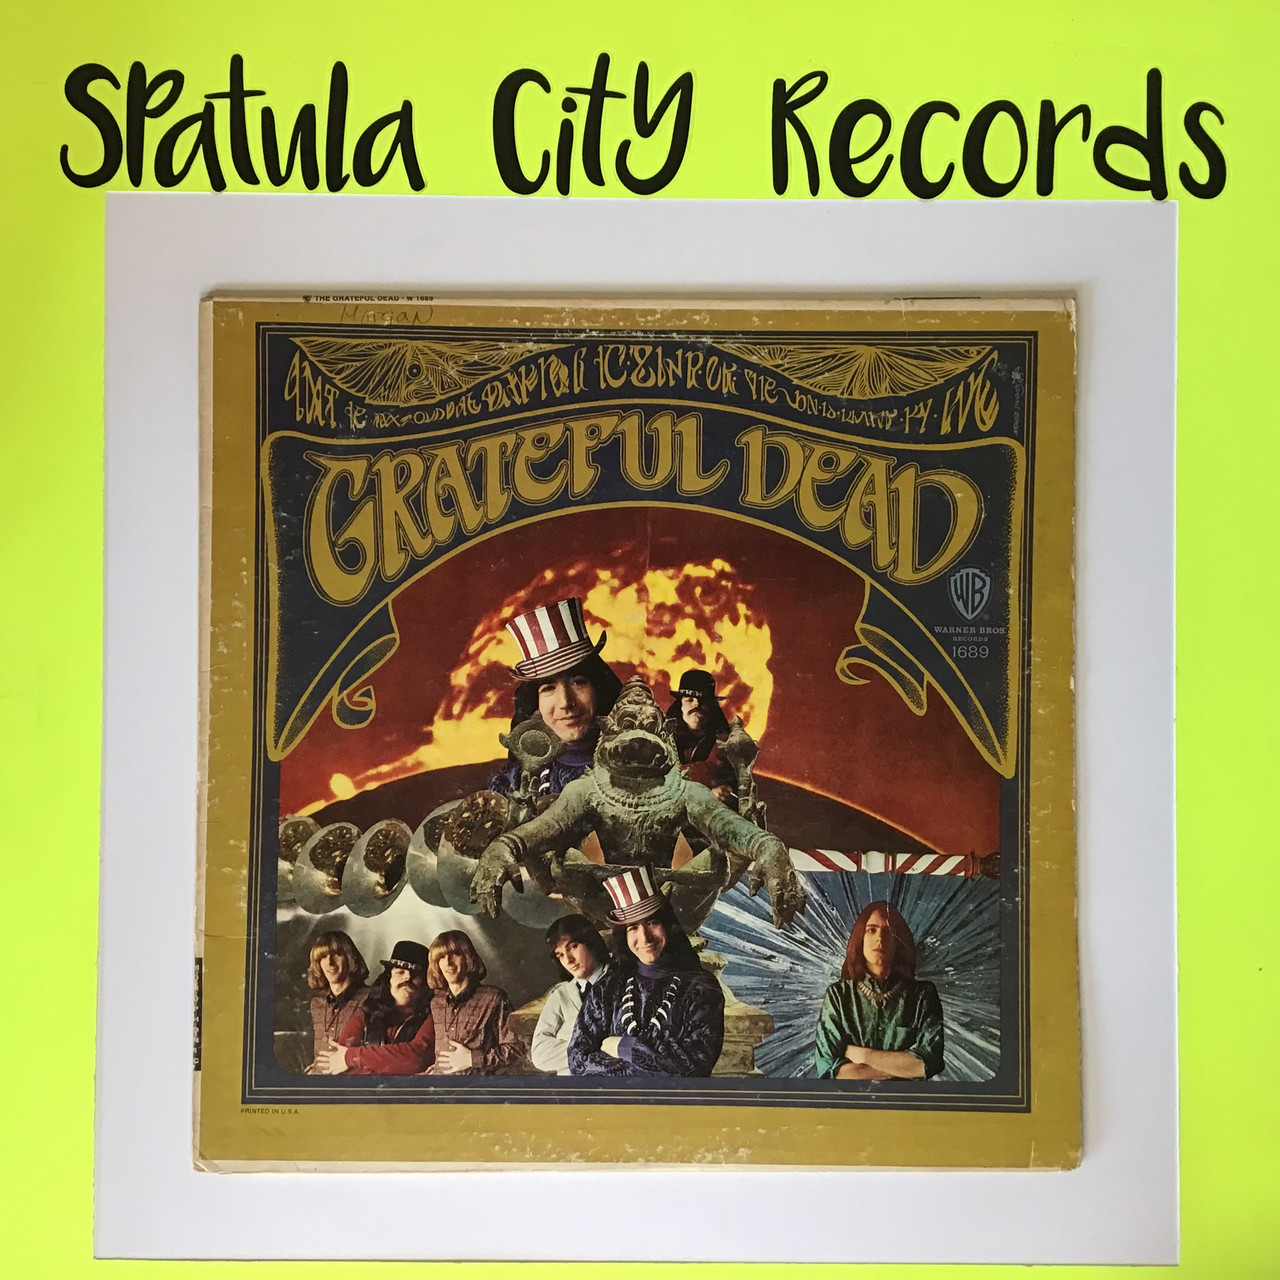 Grateful Dead, The - The Grateful Dead self-titled  - MONO  - vinyl record album LP